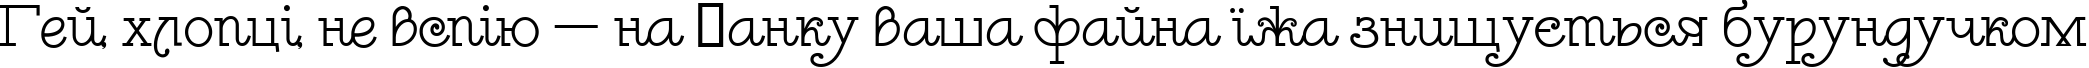 Пример написания шрифтом Leokadia Deco текста на украинском